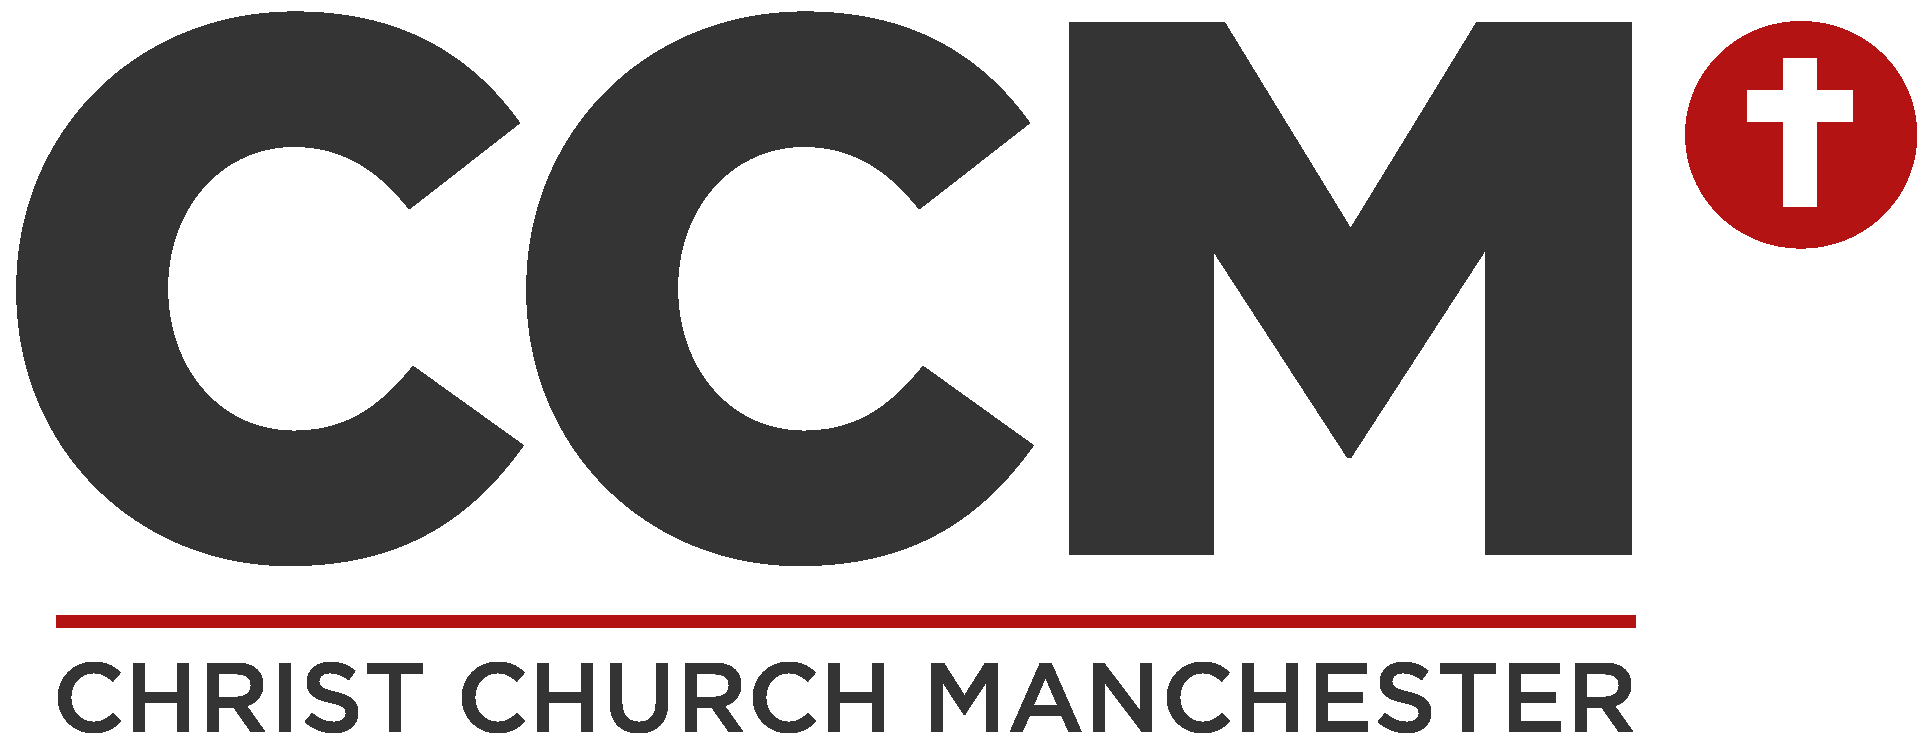 Red and Grey Church Logo - Christ Church Manchester | Christ Church Manchester